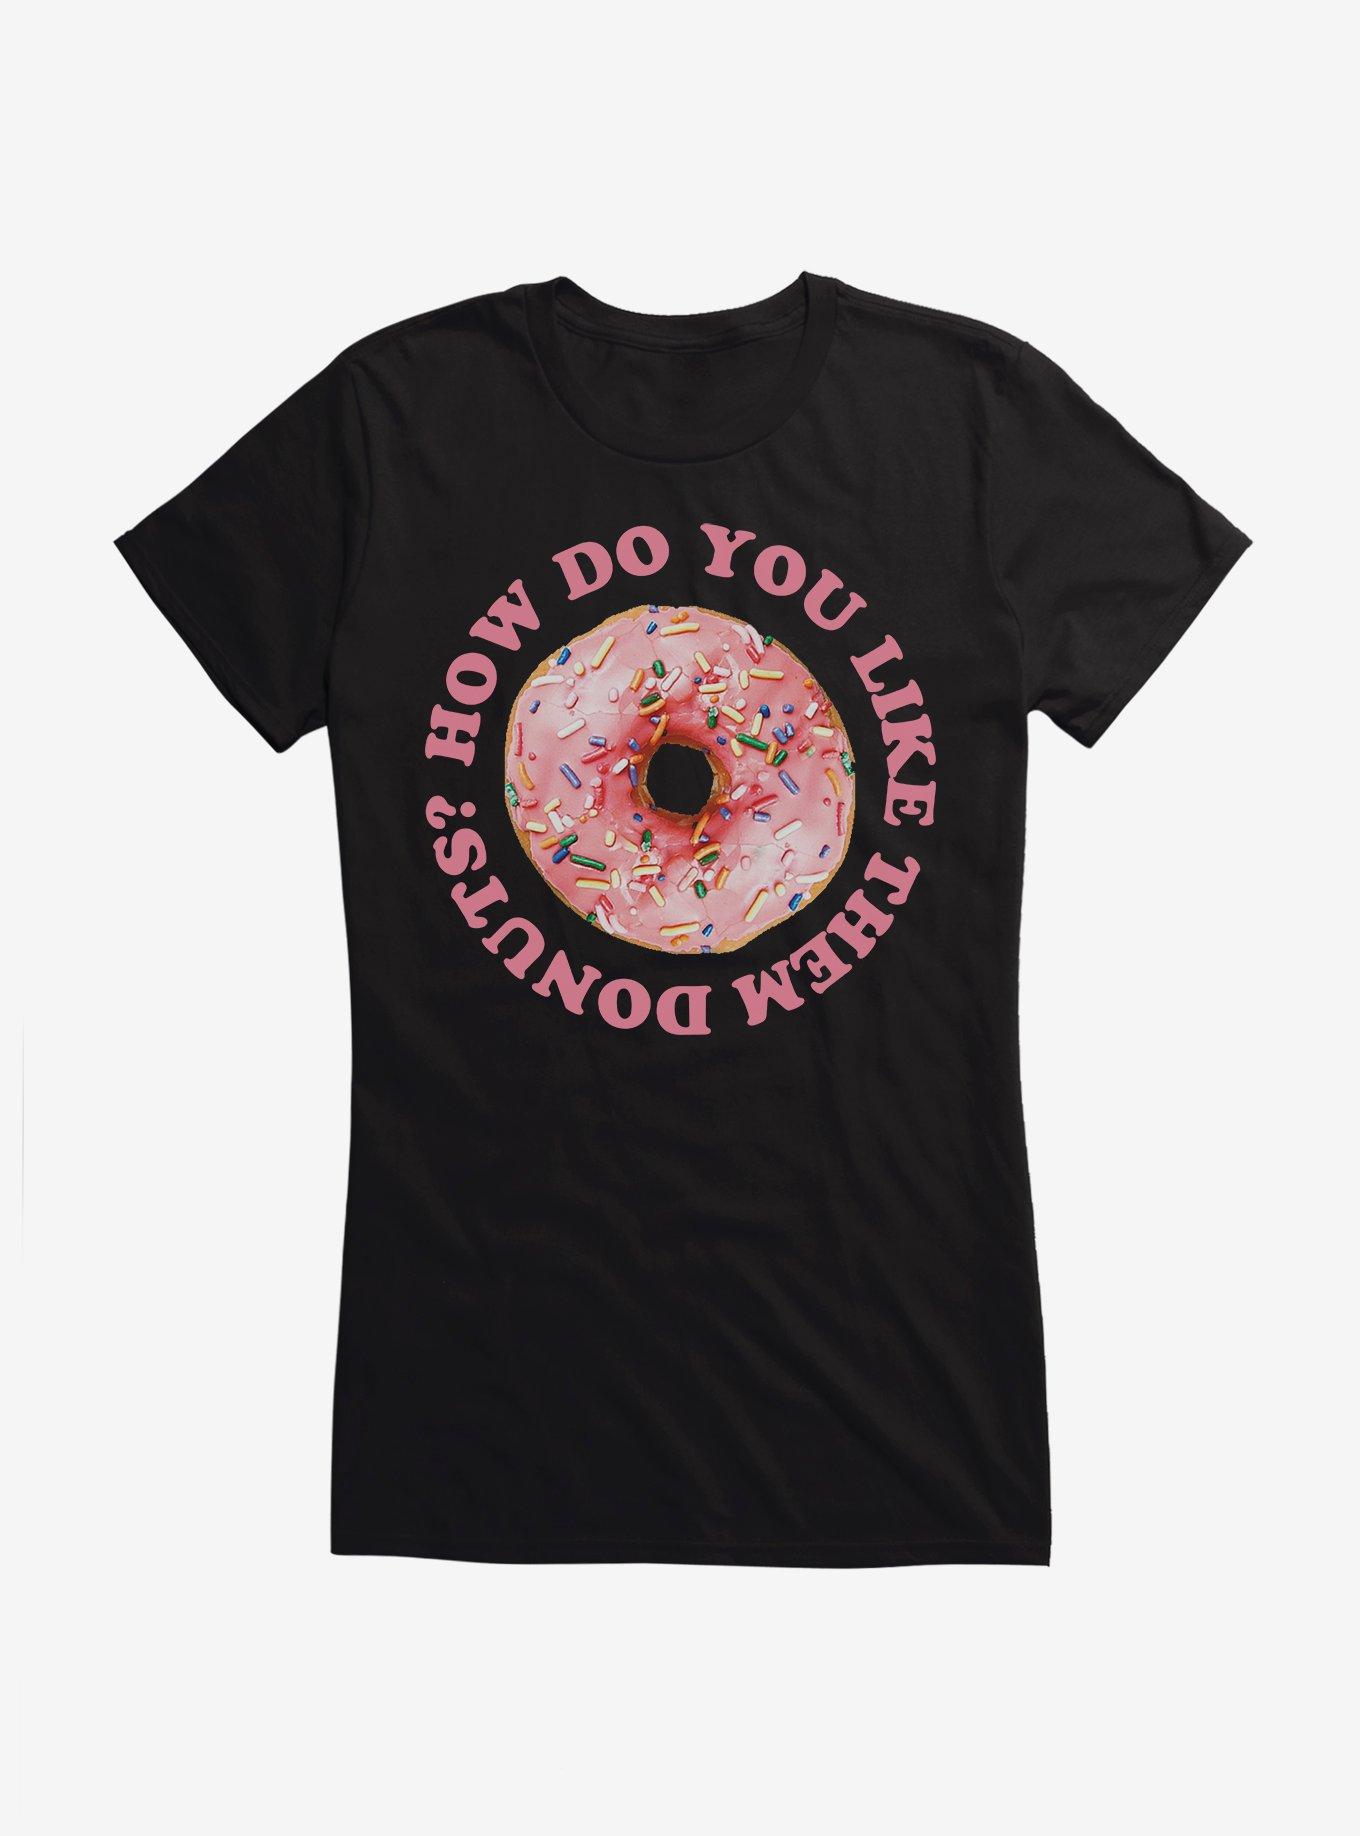 Hot Topic Pink Sprinkle Donut Girls T-Shirt, BLACK, hi-res